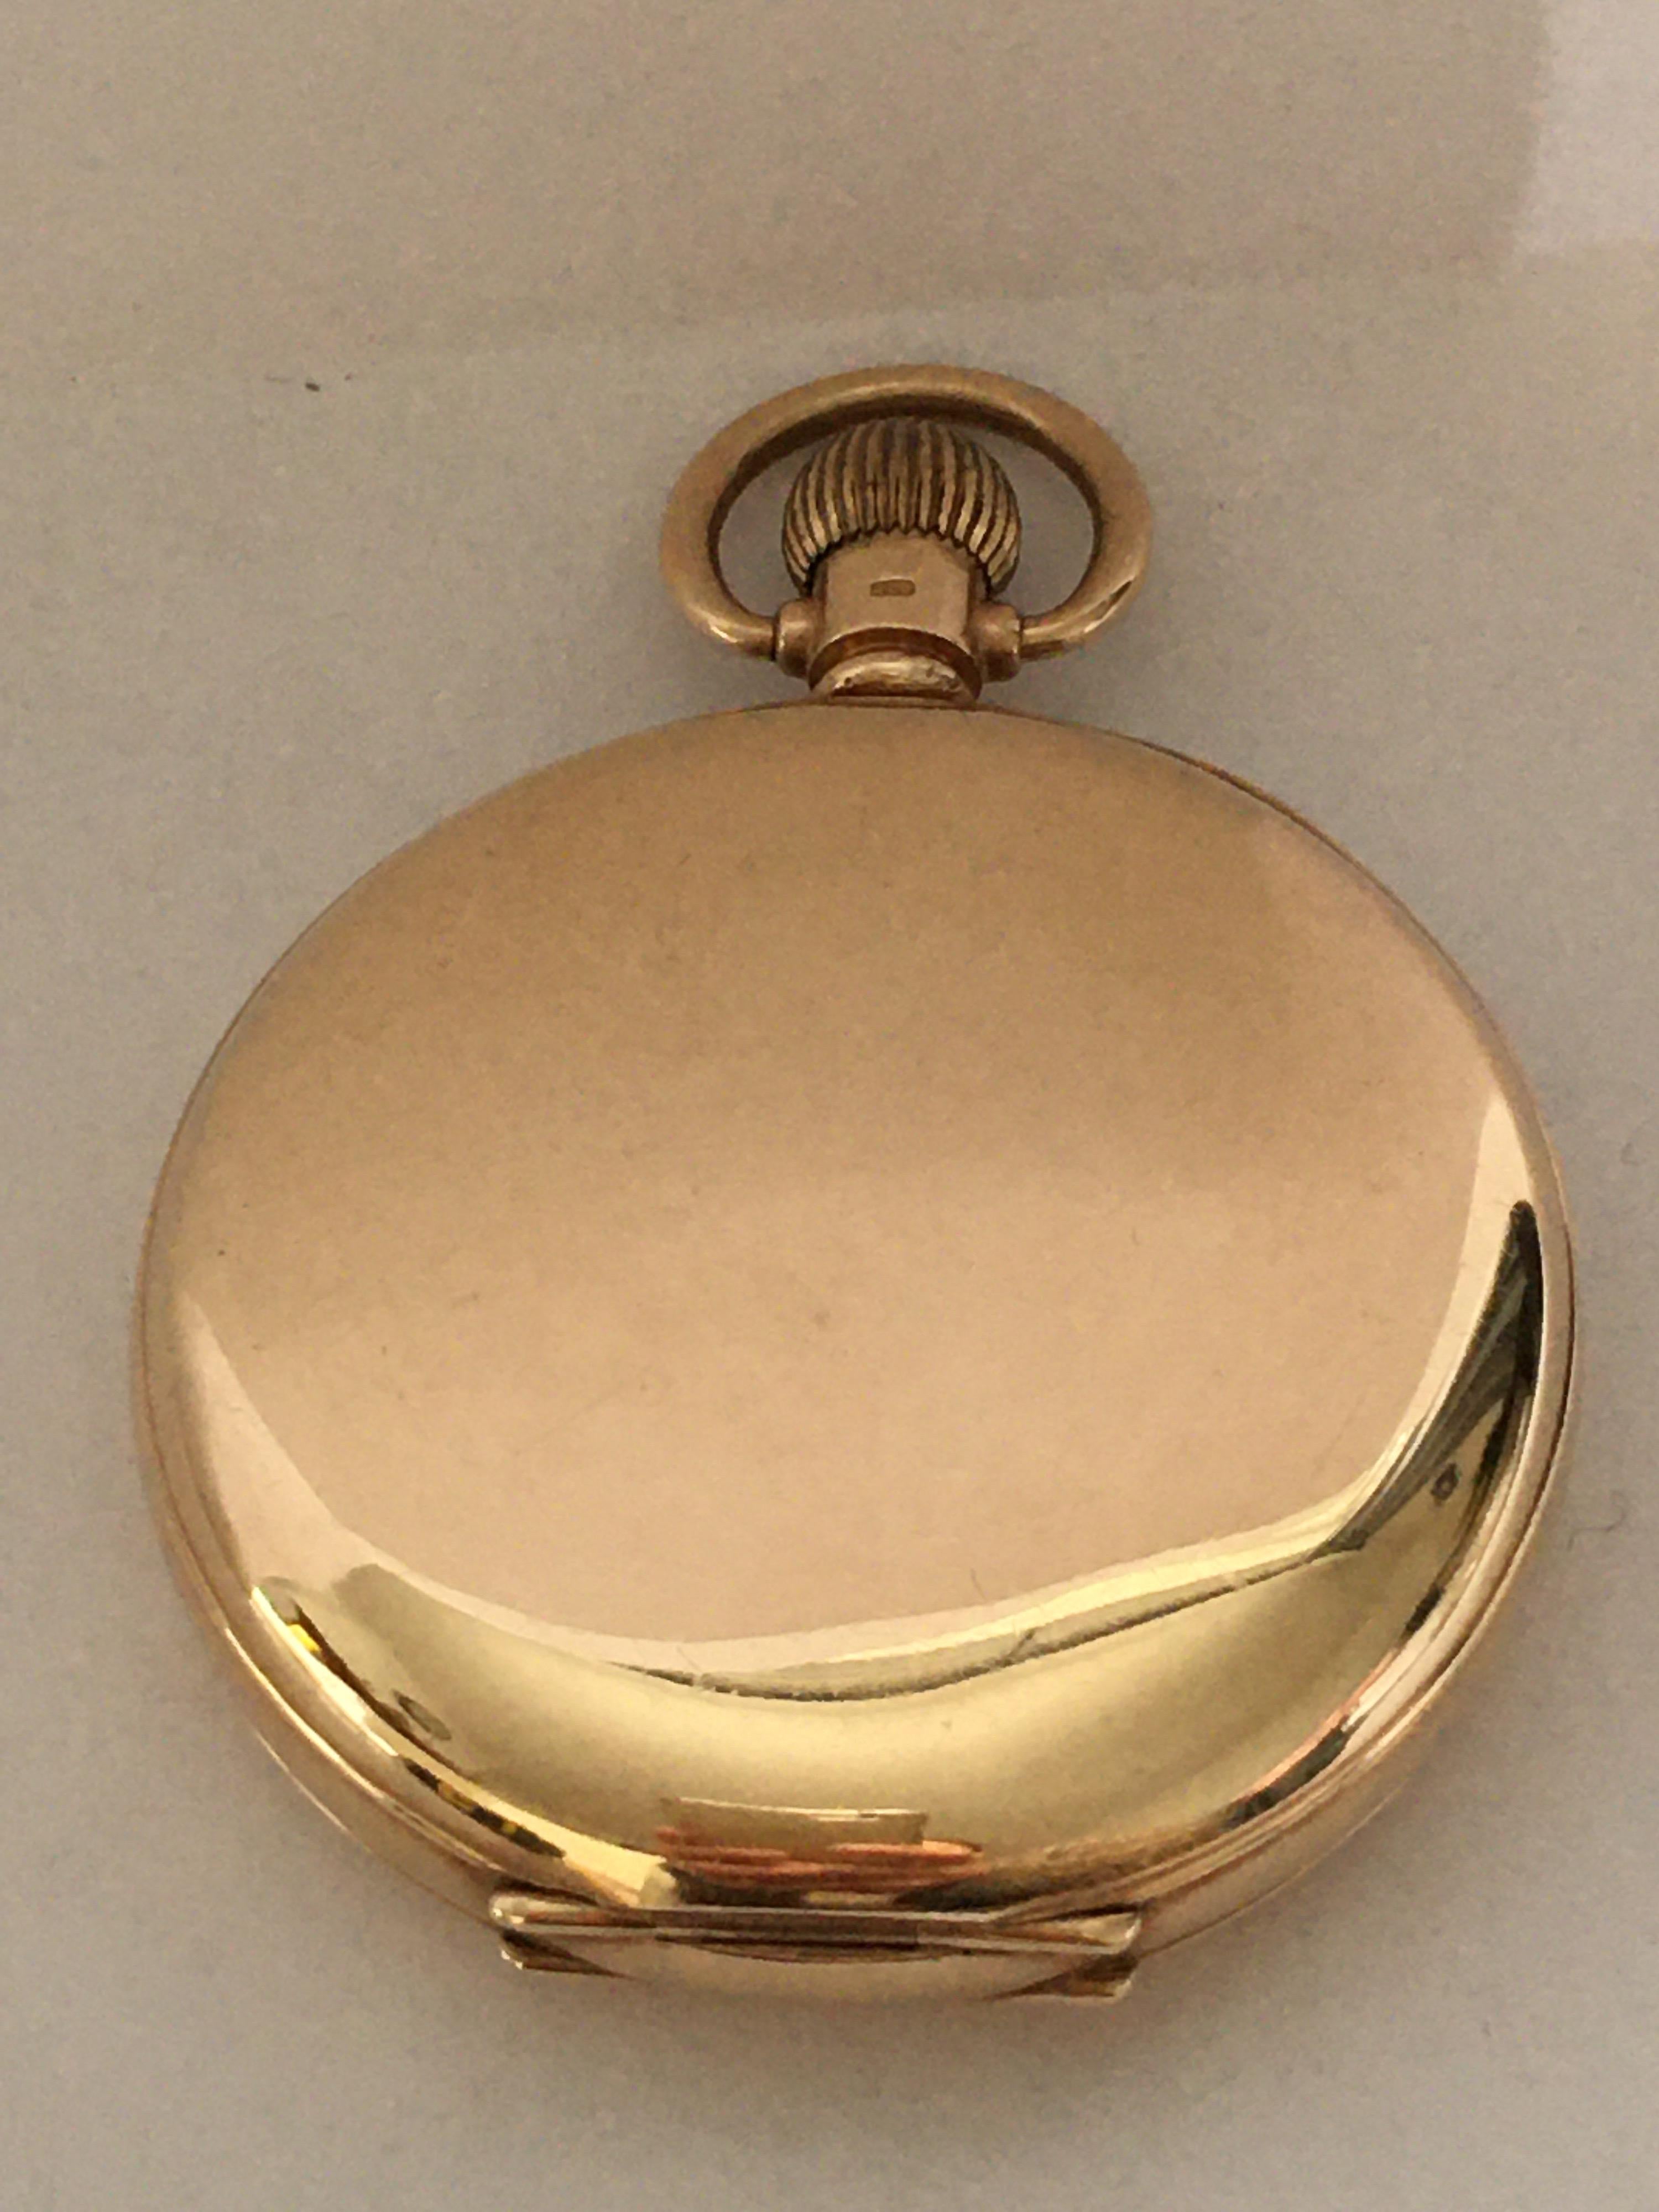 9 Karat Gold Full Hunter Cased Pocket Watch Signed A.W.W. Co. Waltham Mass U.S.A 11